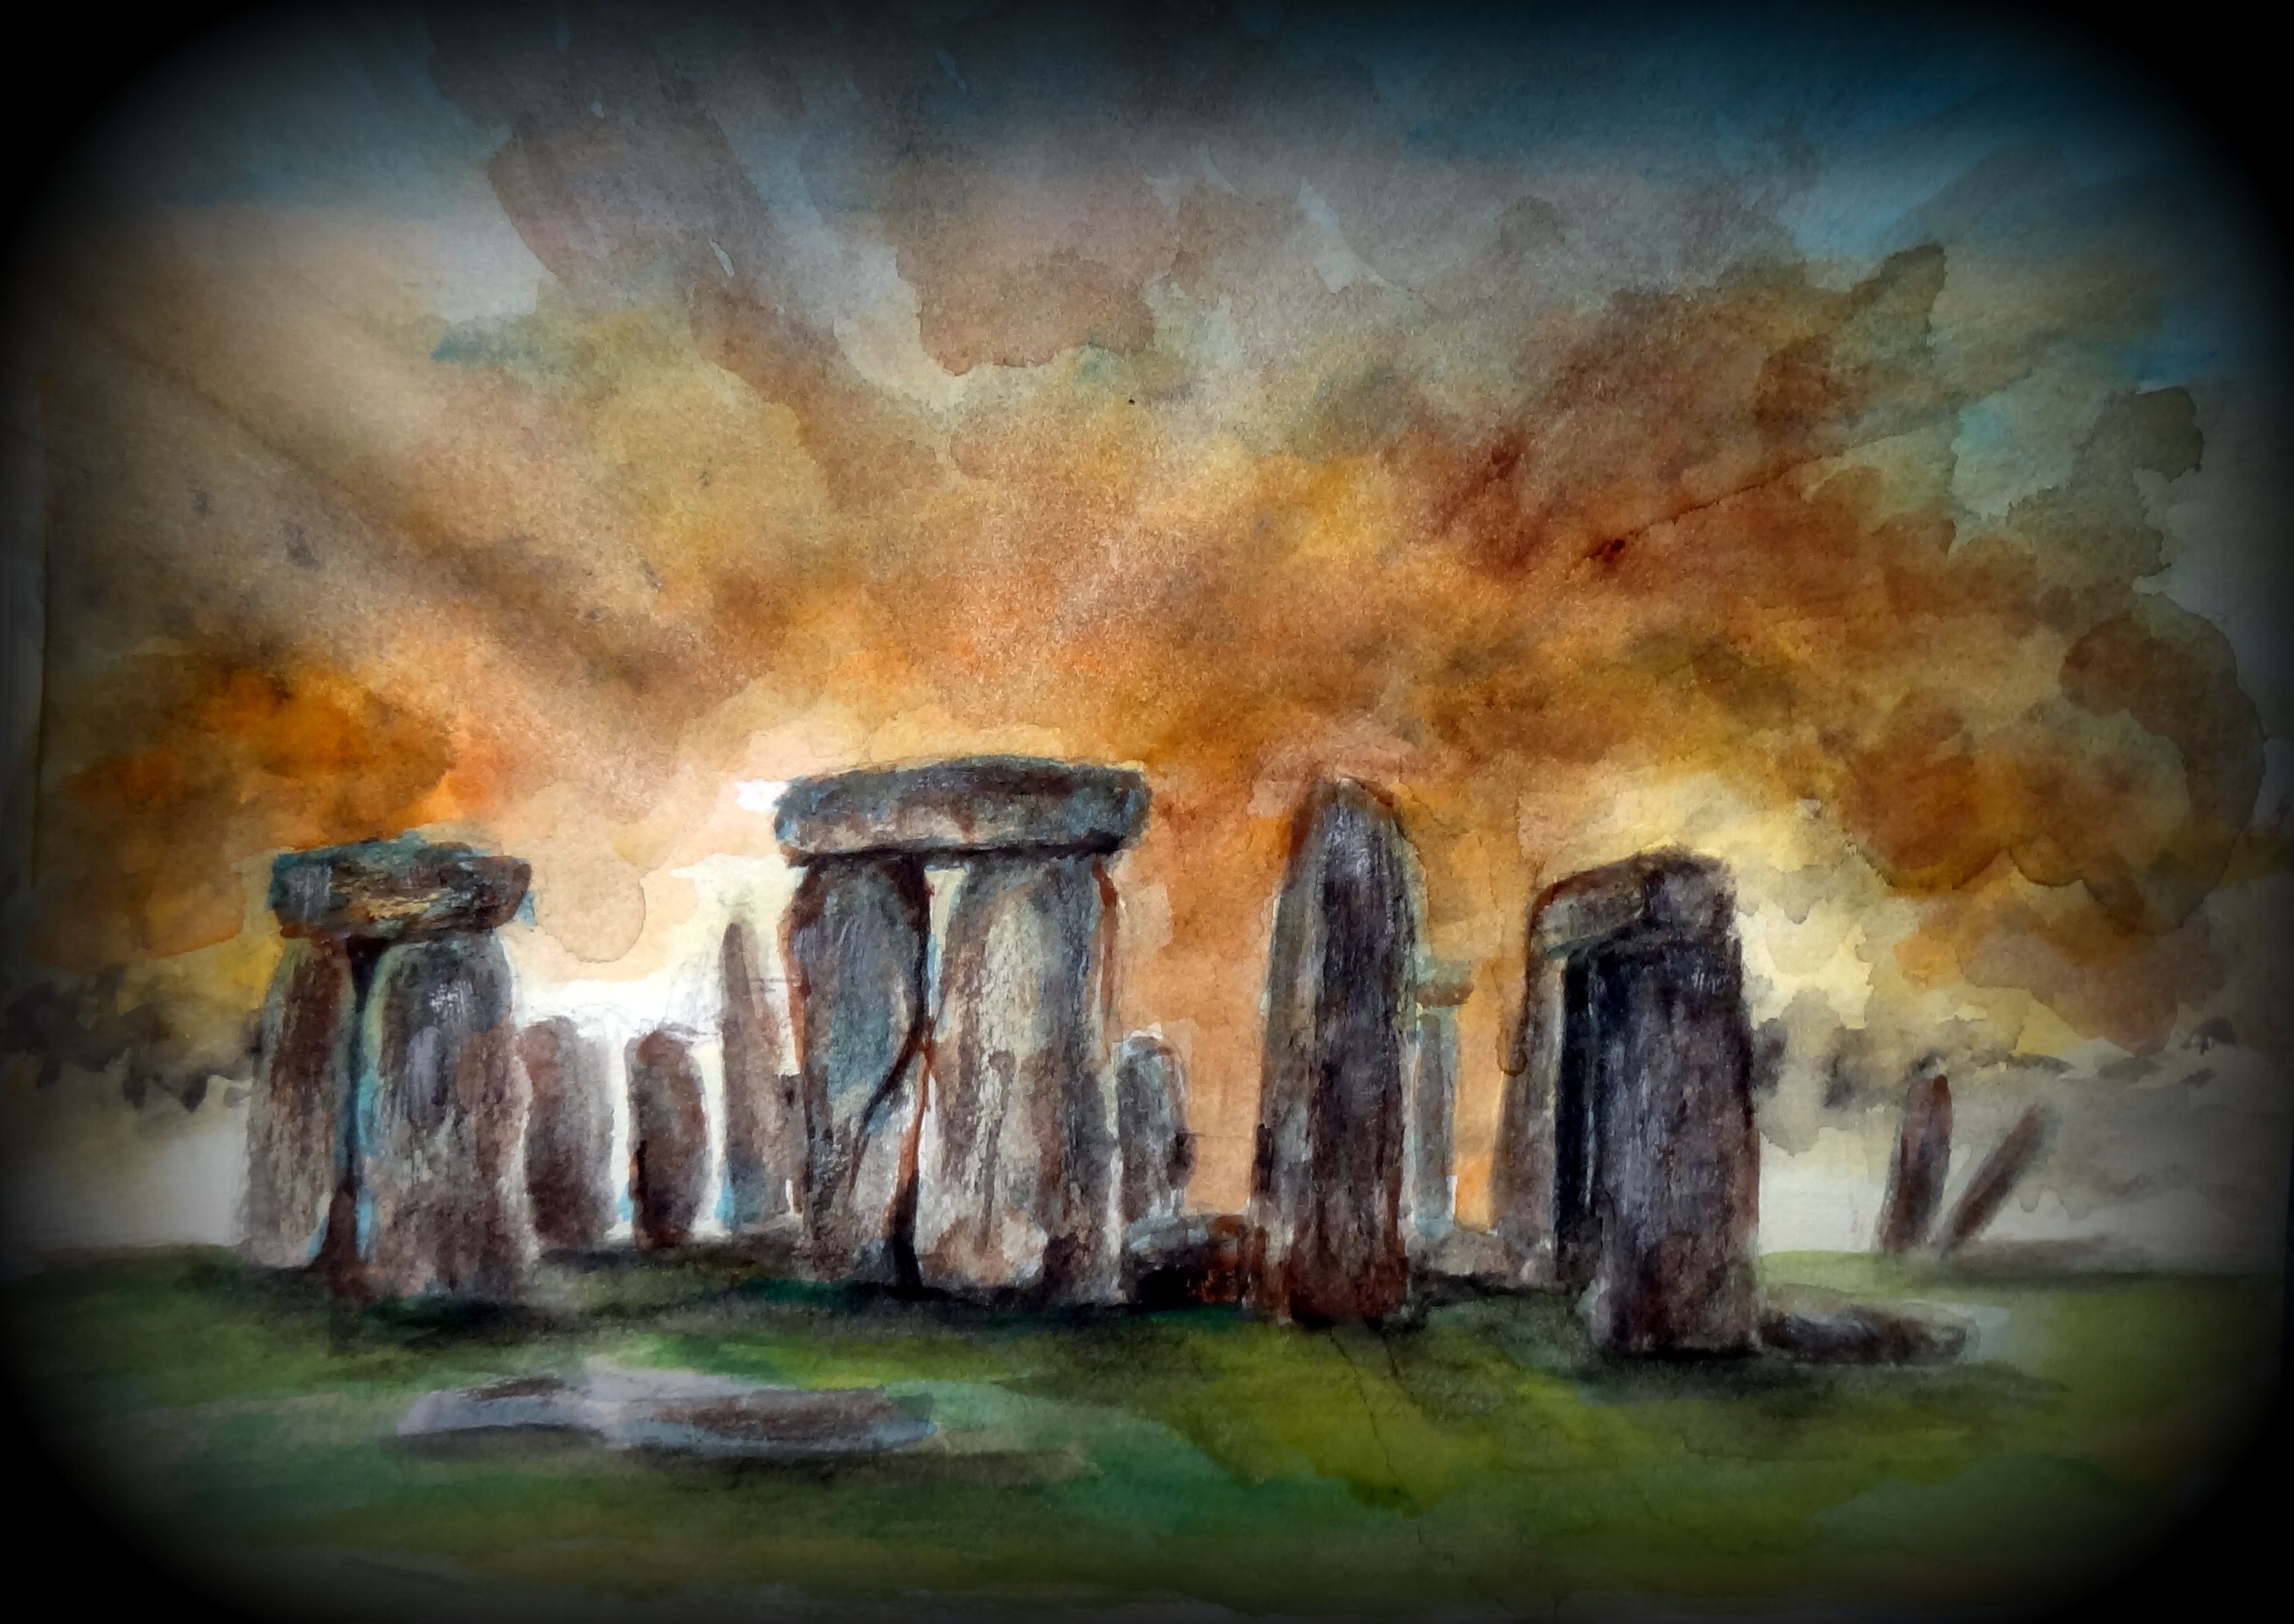 dhruba mazumder - fineart, illustrations, design, prints: Stonehenge  Paper Test with Watercolor